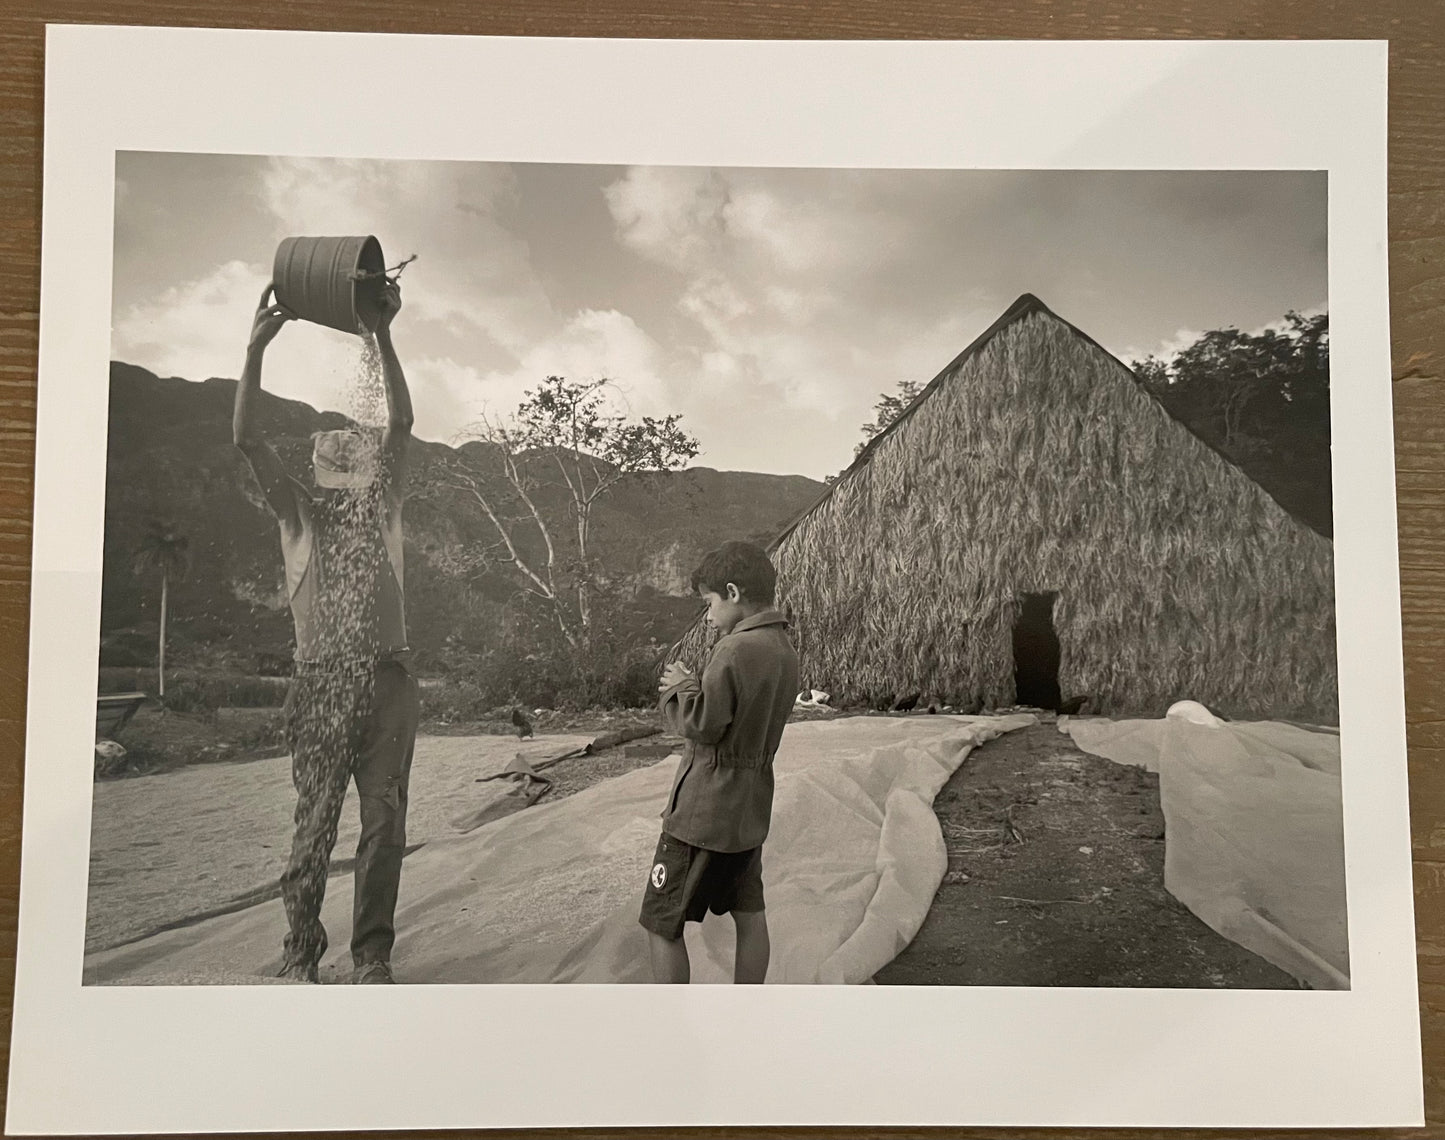 Susan S. Bank (American, 20th c.) Cuba Photograph Print Campo 8x10 “Julio Sifting Rice with Osbel”